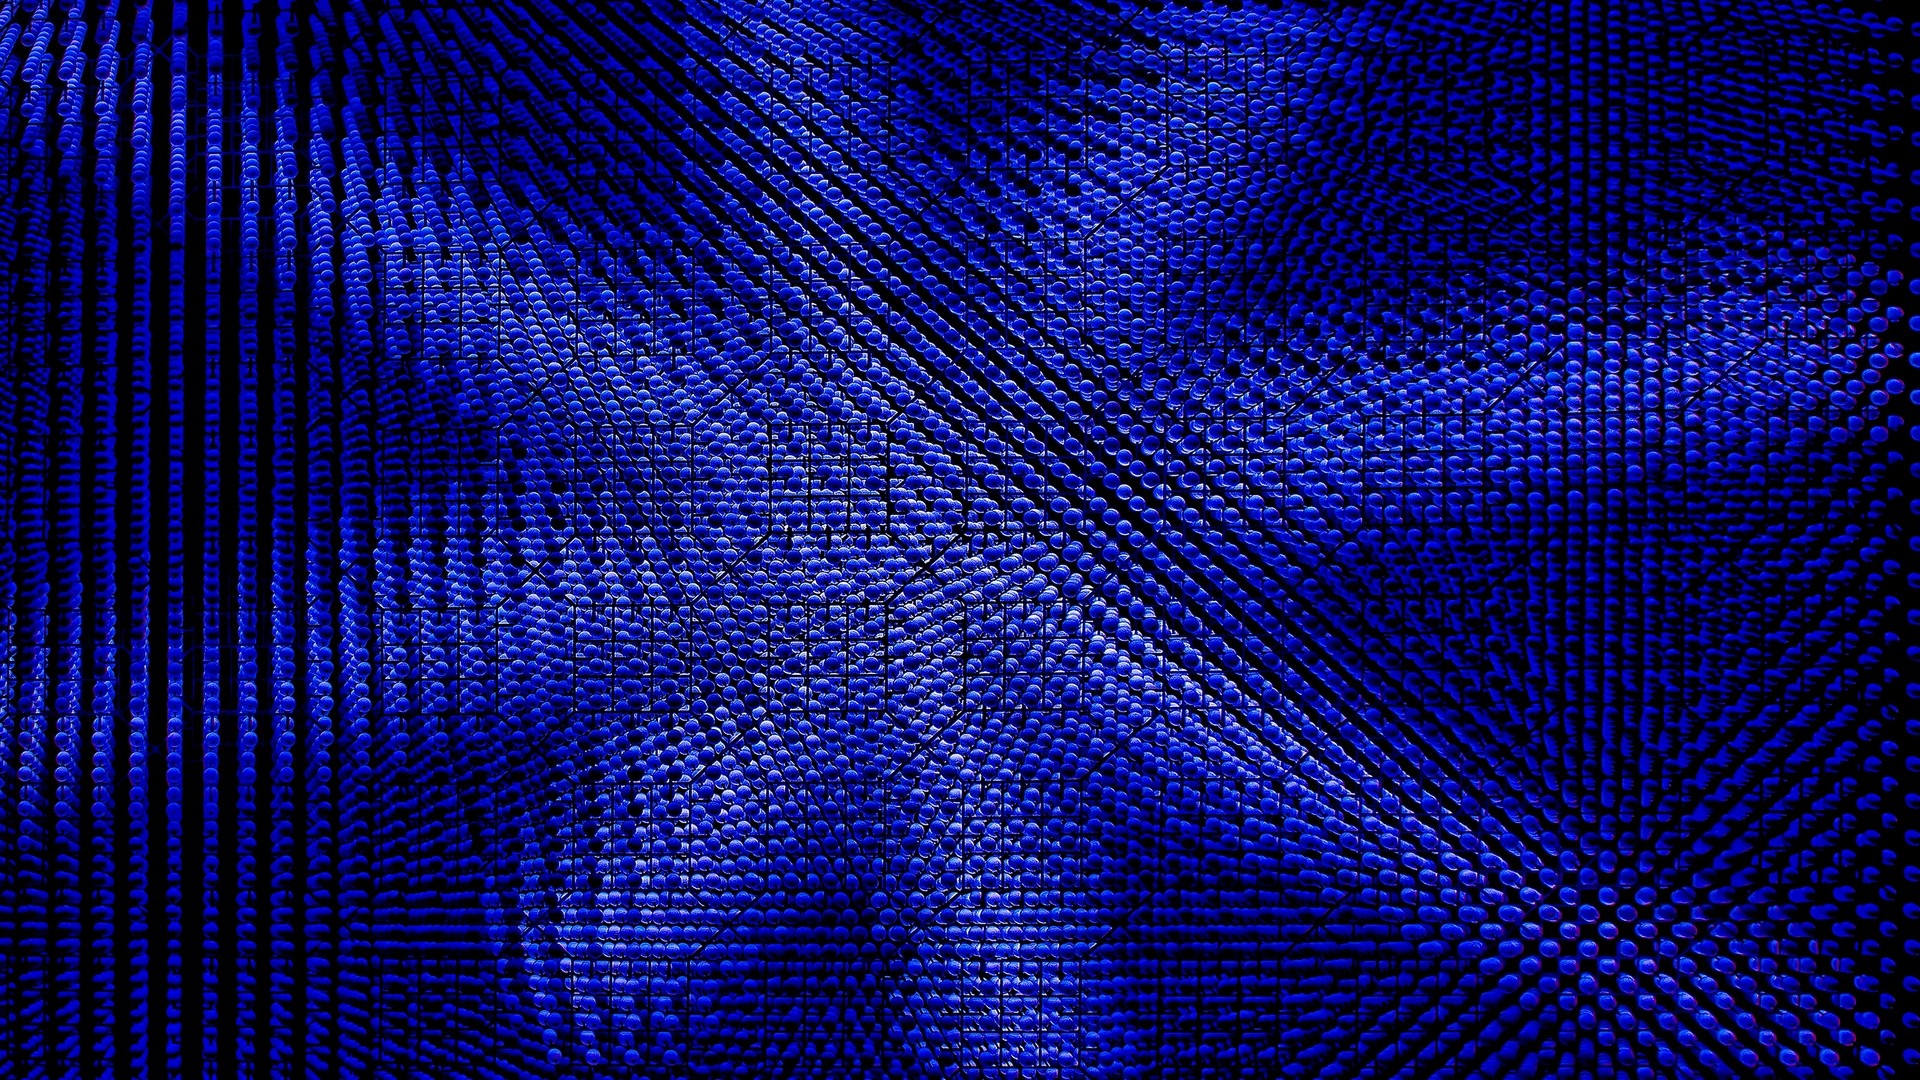 Blue bumpy surface HD Wallpaper iPhone 7 Plus / iPhone 8 Plus